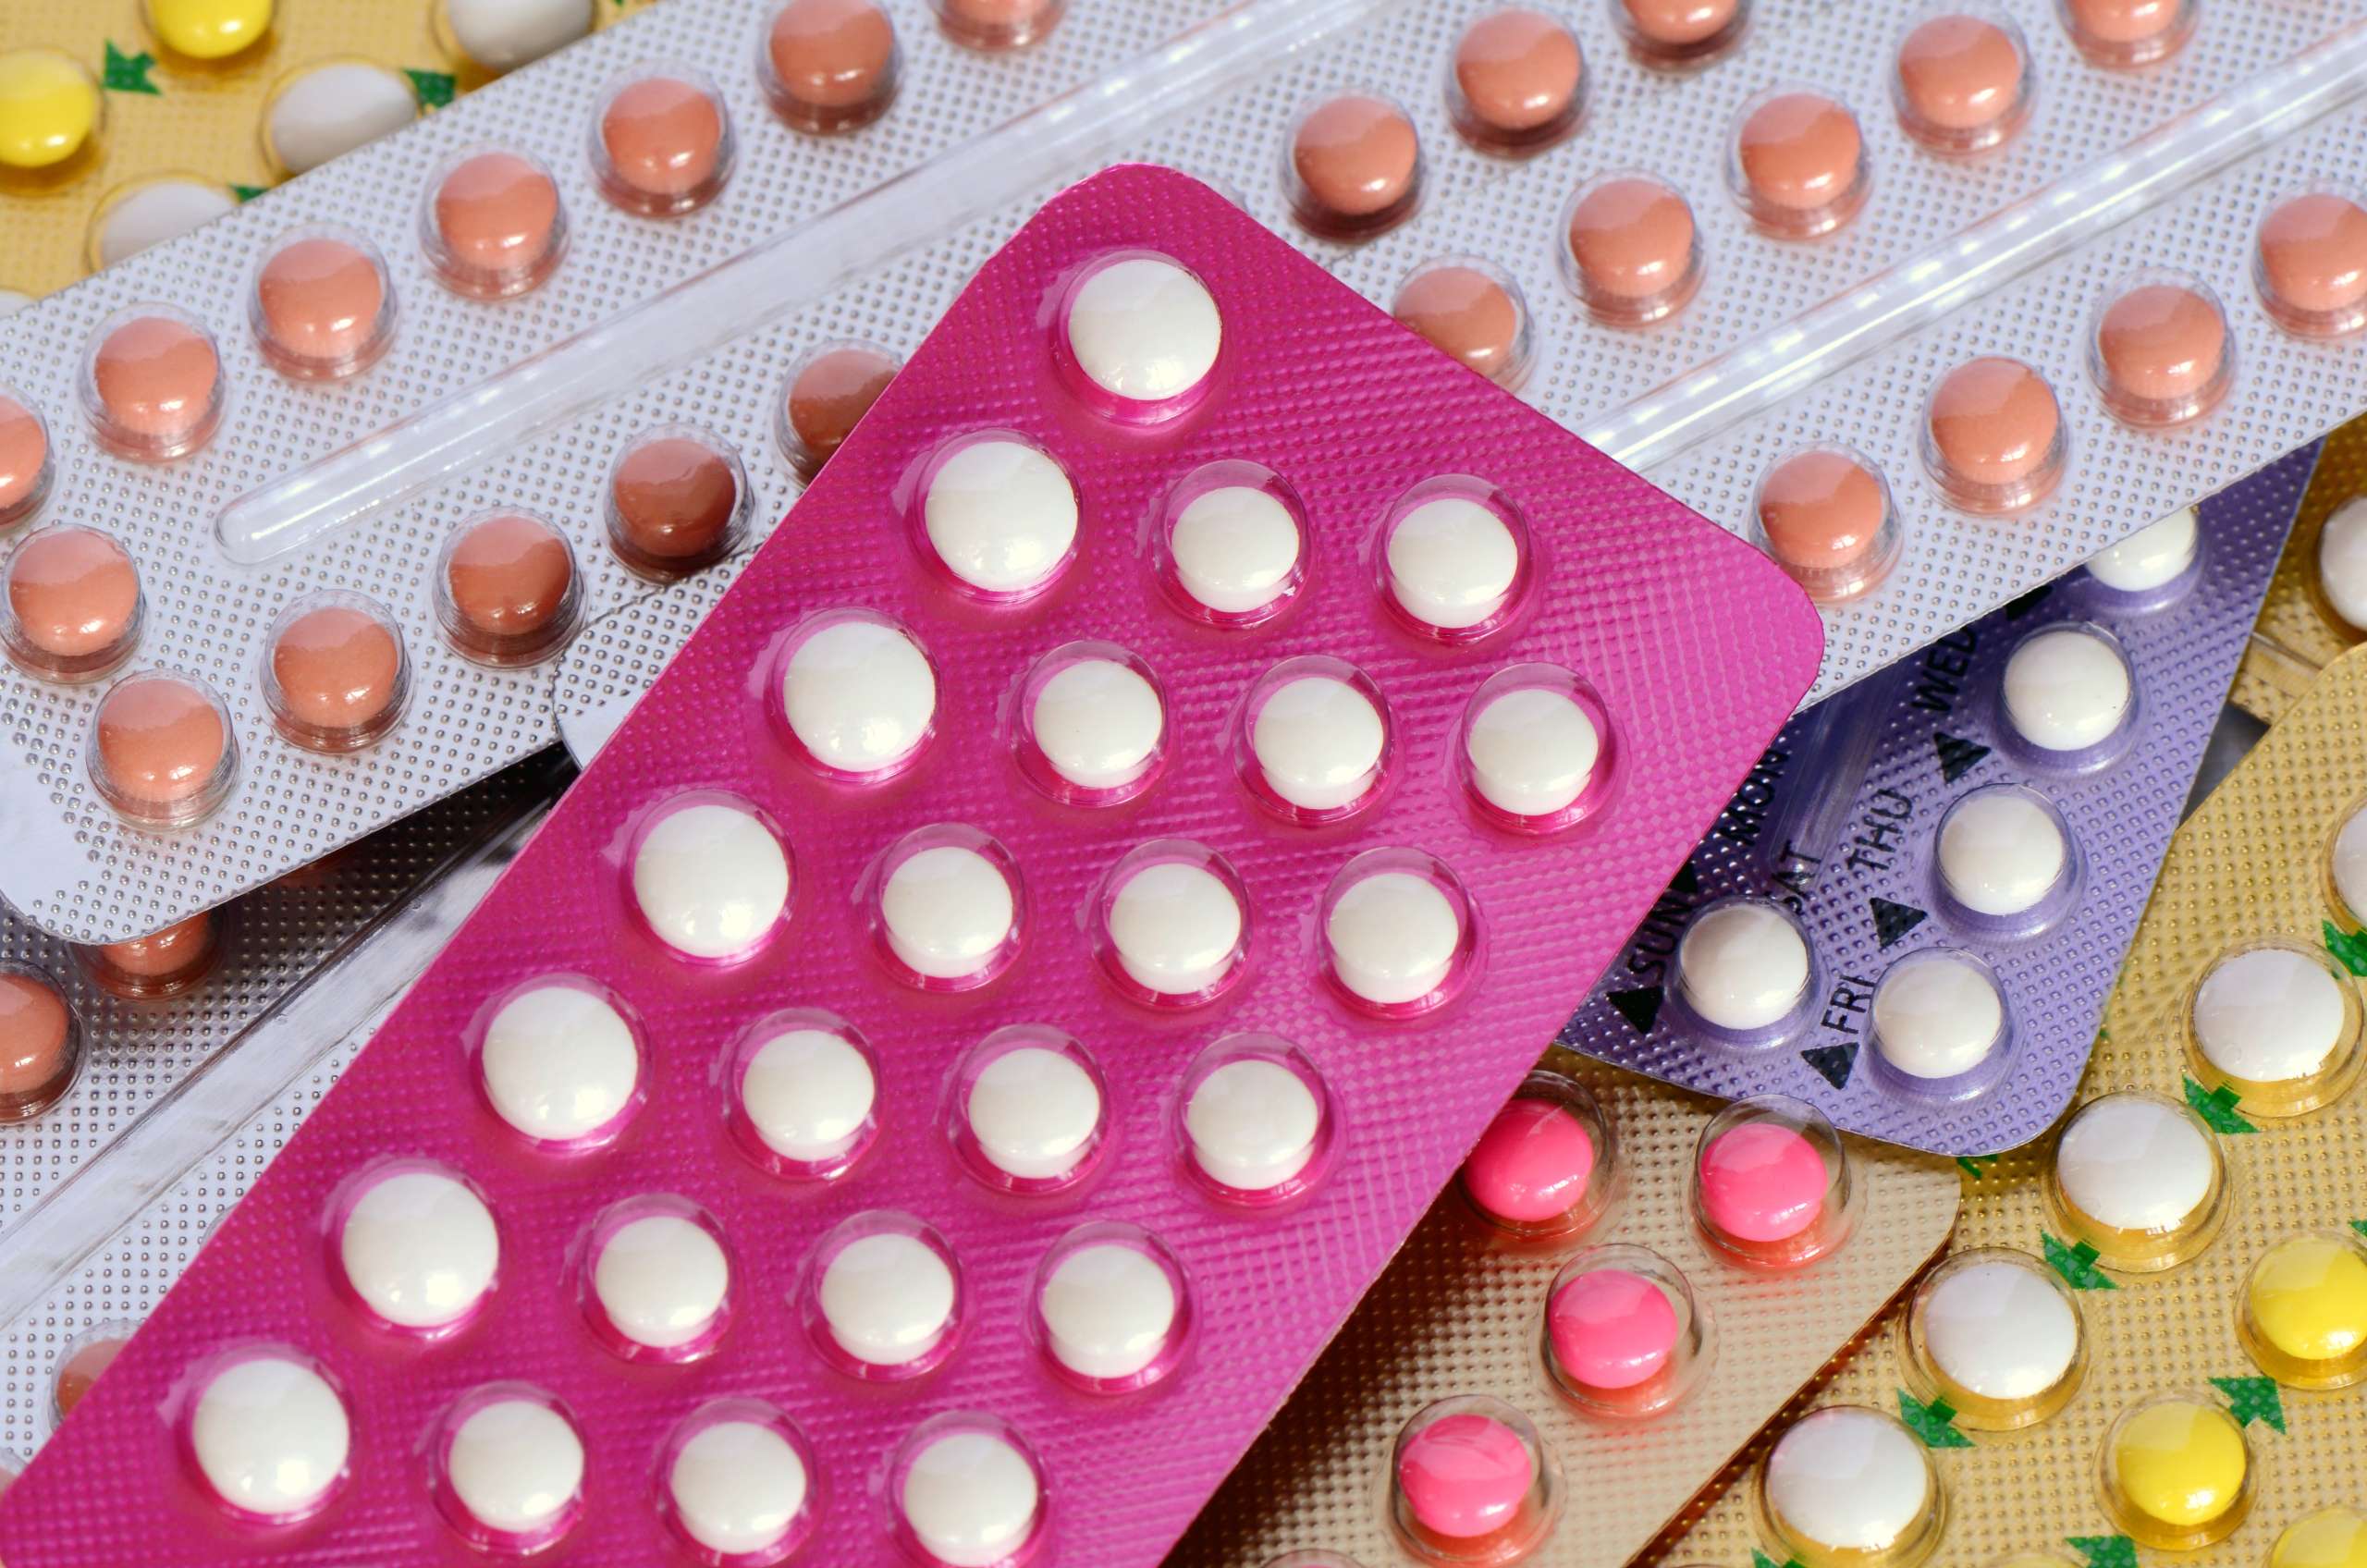 antibiotics- Maternal Drug Use